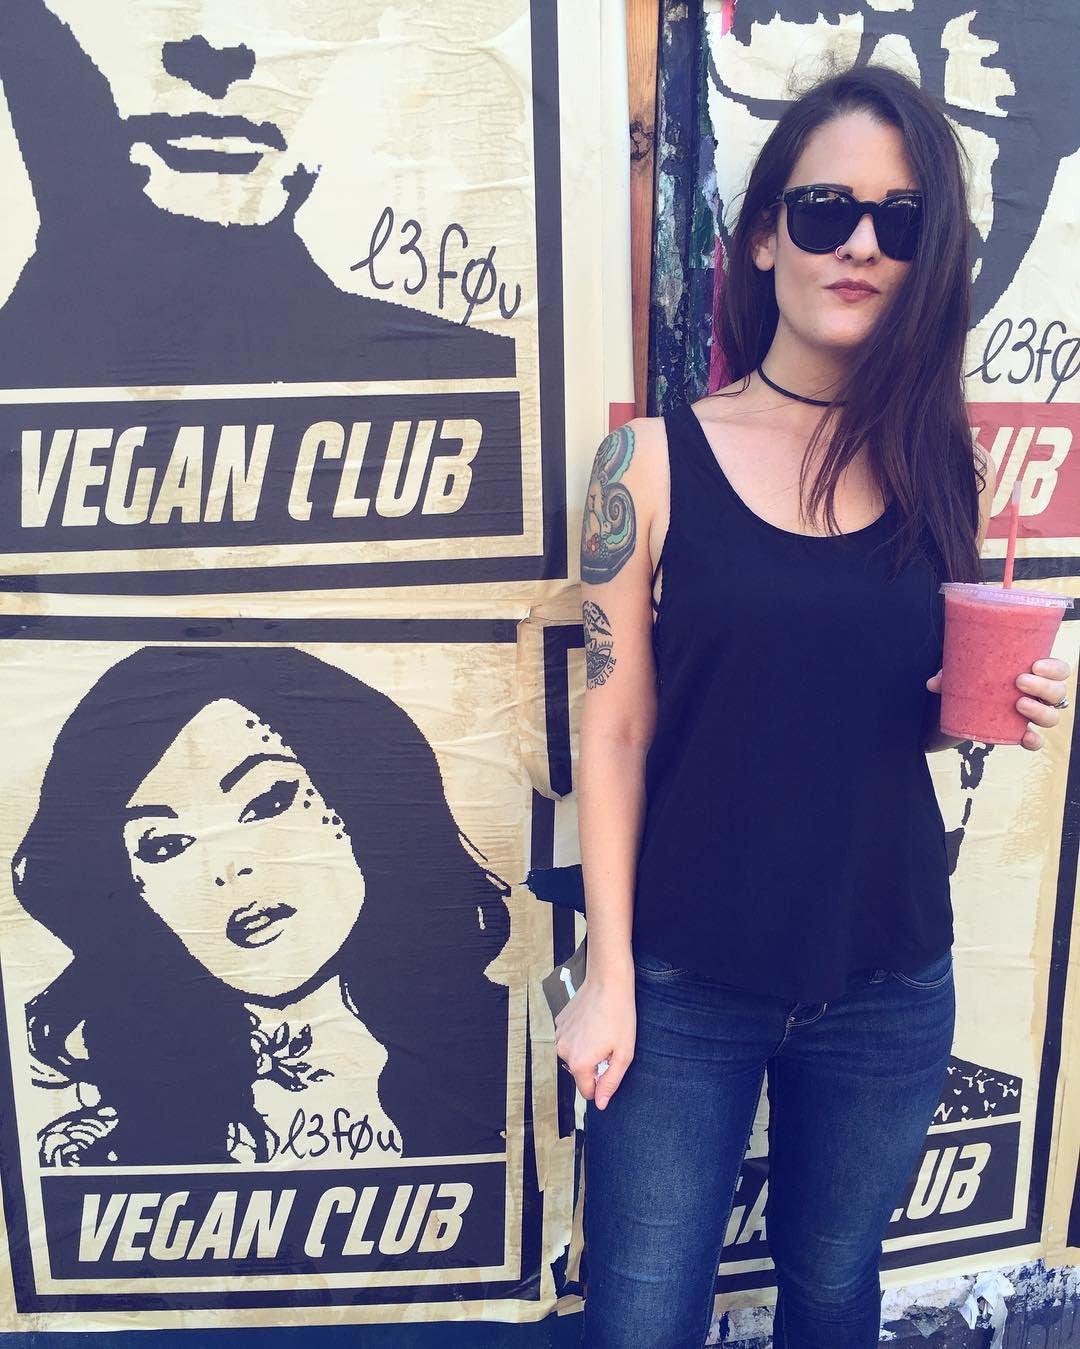 Street Art NewsPrint Poster Vegan Club Kat Von D Signed L3f0u @fettlevegan @nataliavandort @shanaholic @melrene @thehollywoodwerewolf